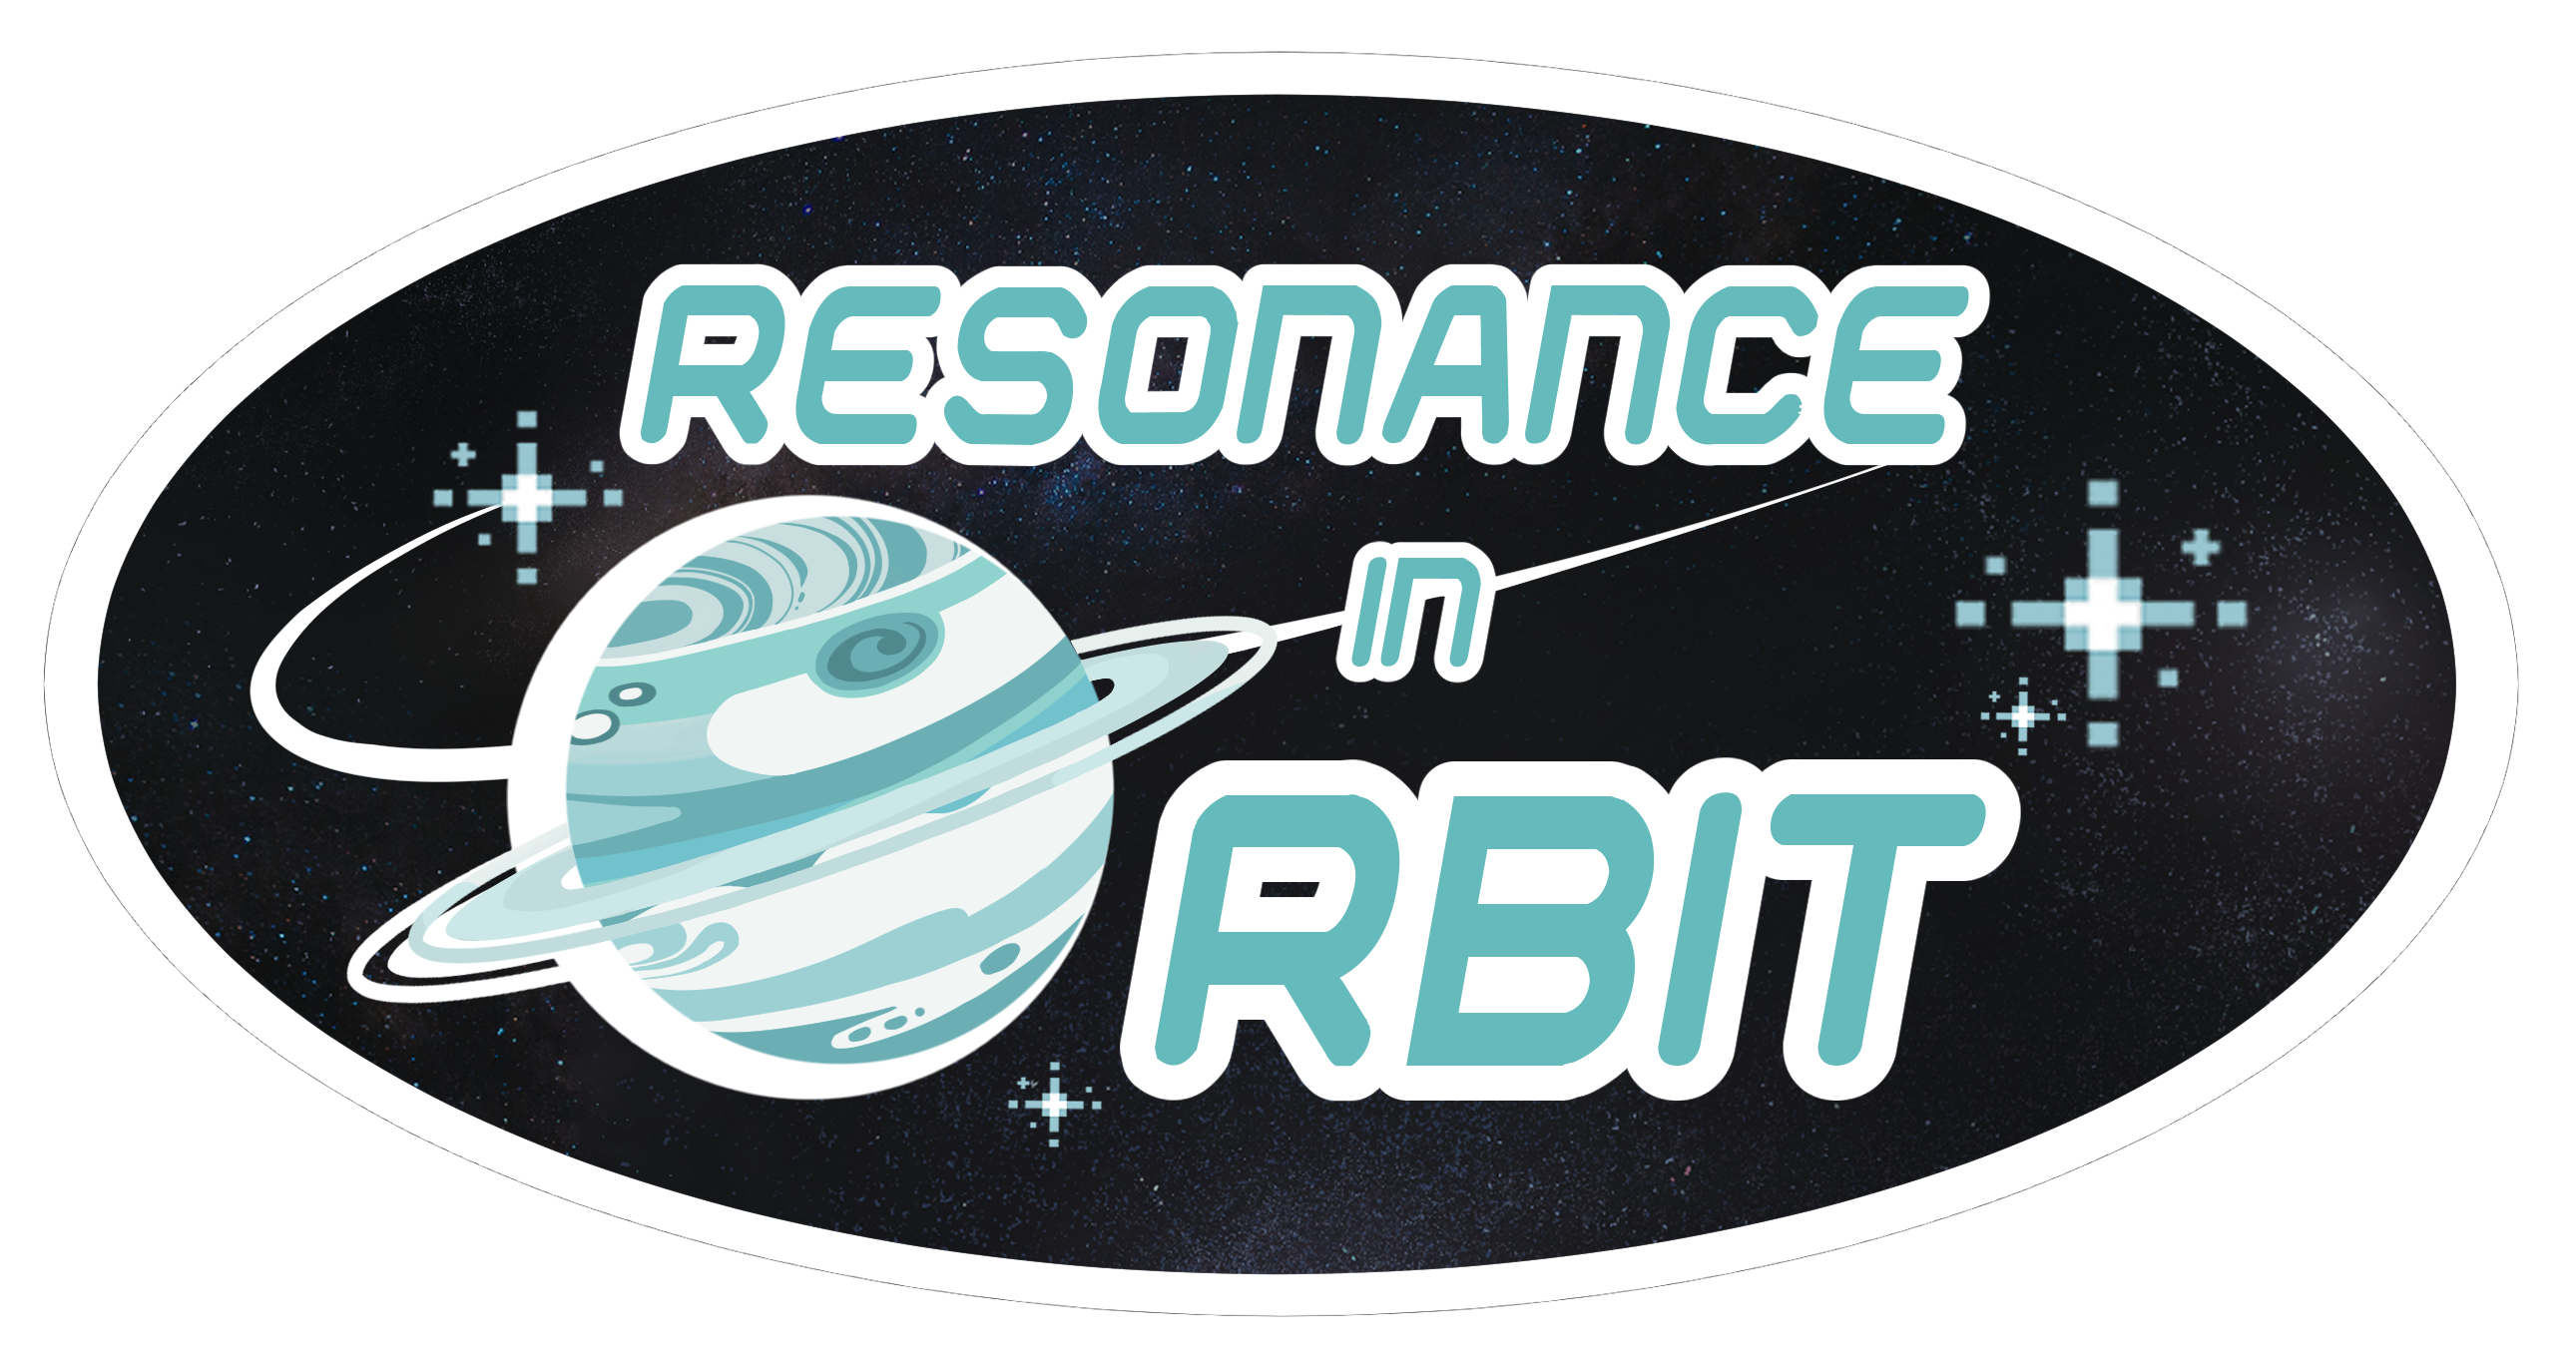 Resonance in Orbit